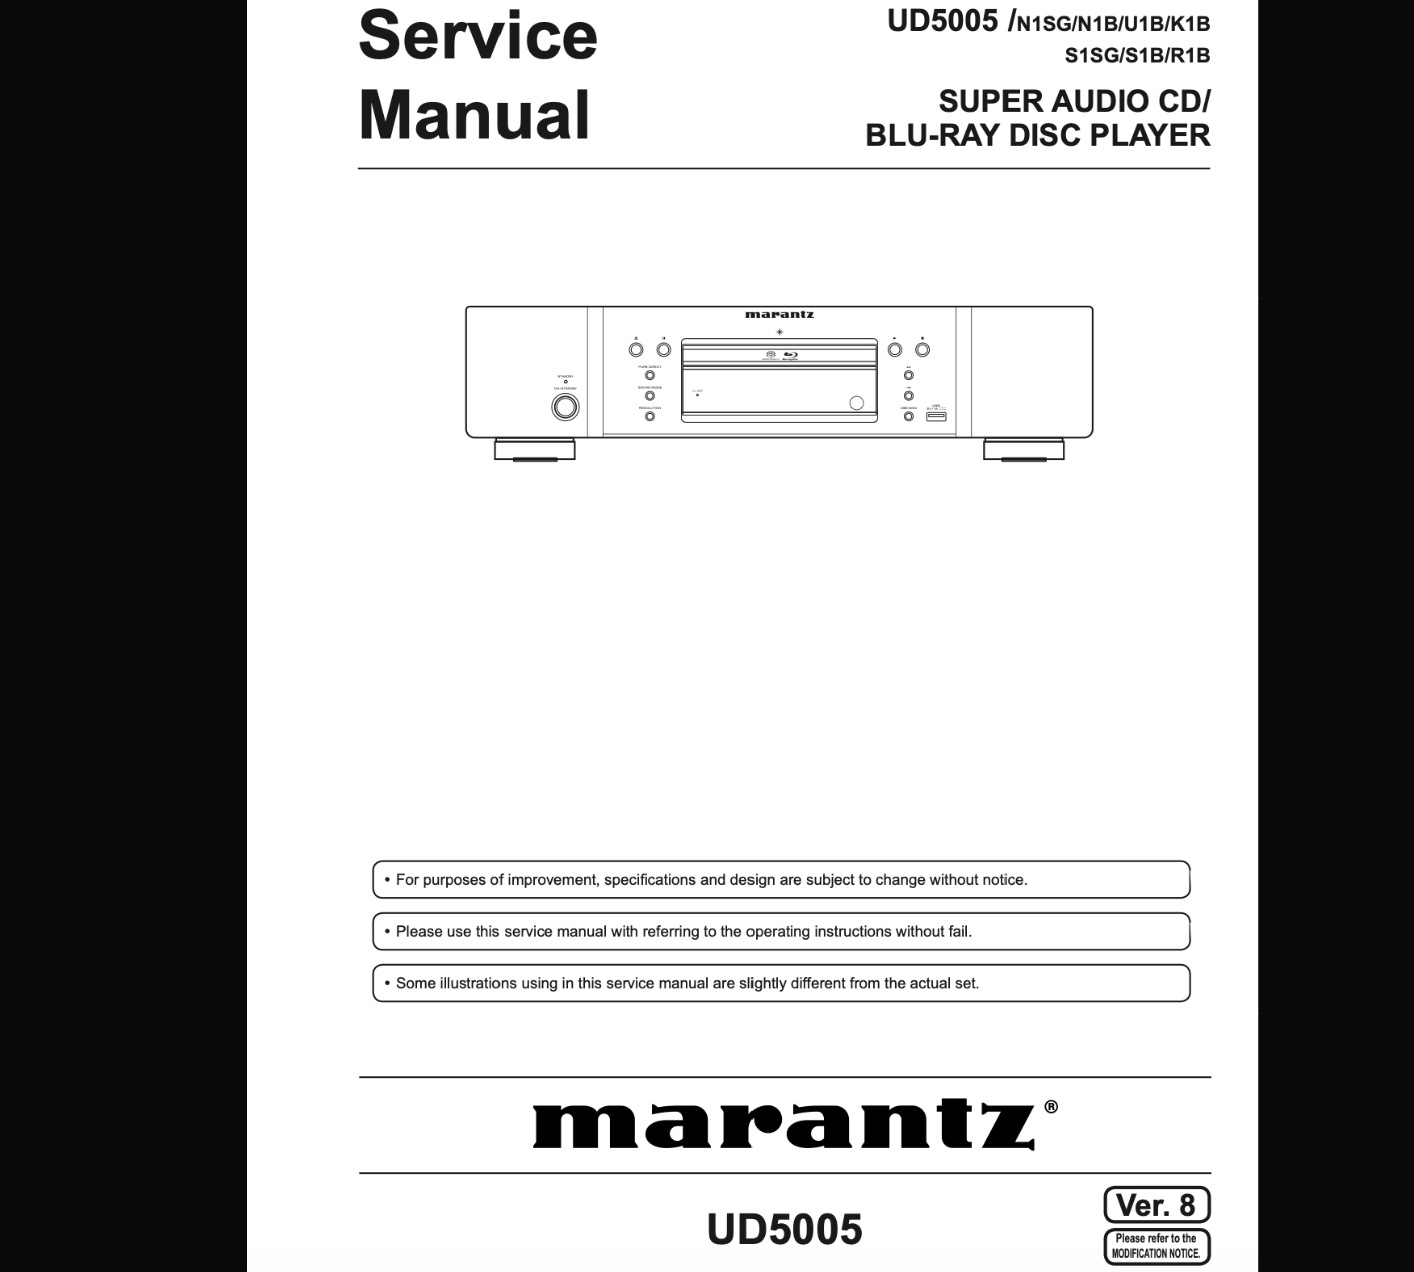 Marantz UD5005  SUPER AUDIO CD /  BLU-RAY DISC PLAYER Service Manual, Exploded View, Schematic Diagram, Cirquit Description